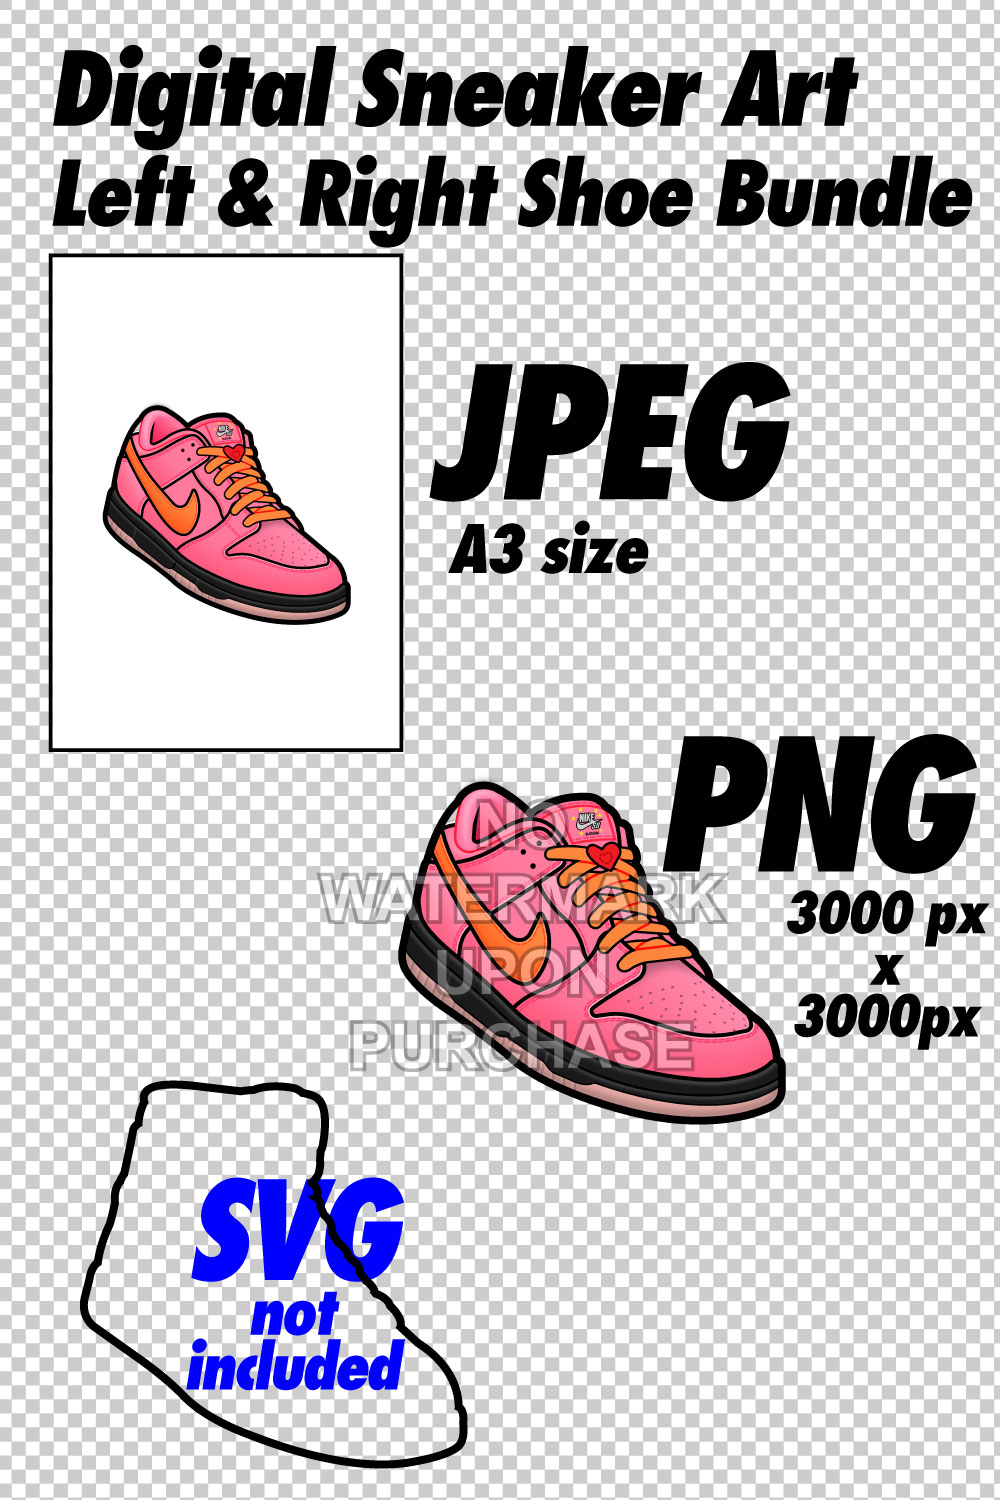 Dunk Low Powerpuff Girls Blossom JPEG PNG Sneaker Art right & left shoe bundle pinterest preview image.